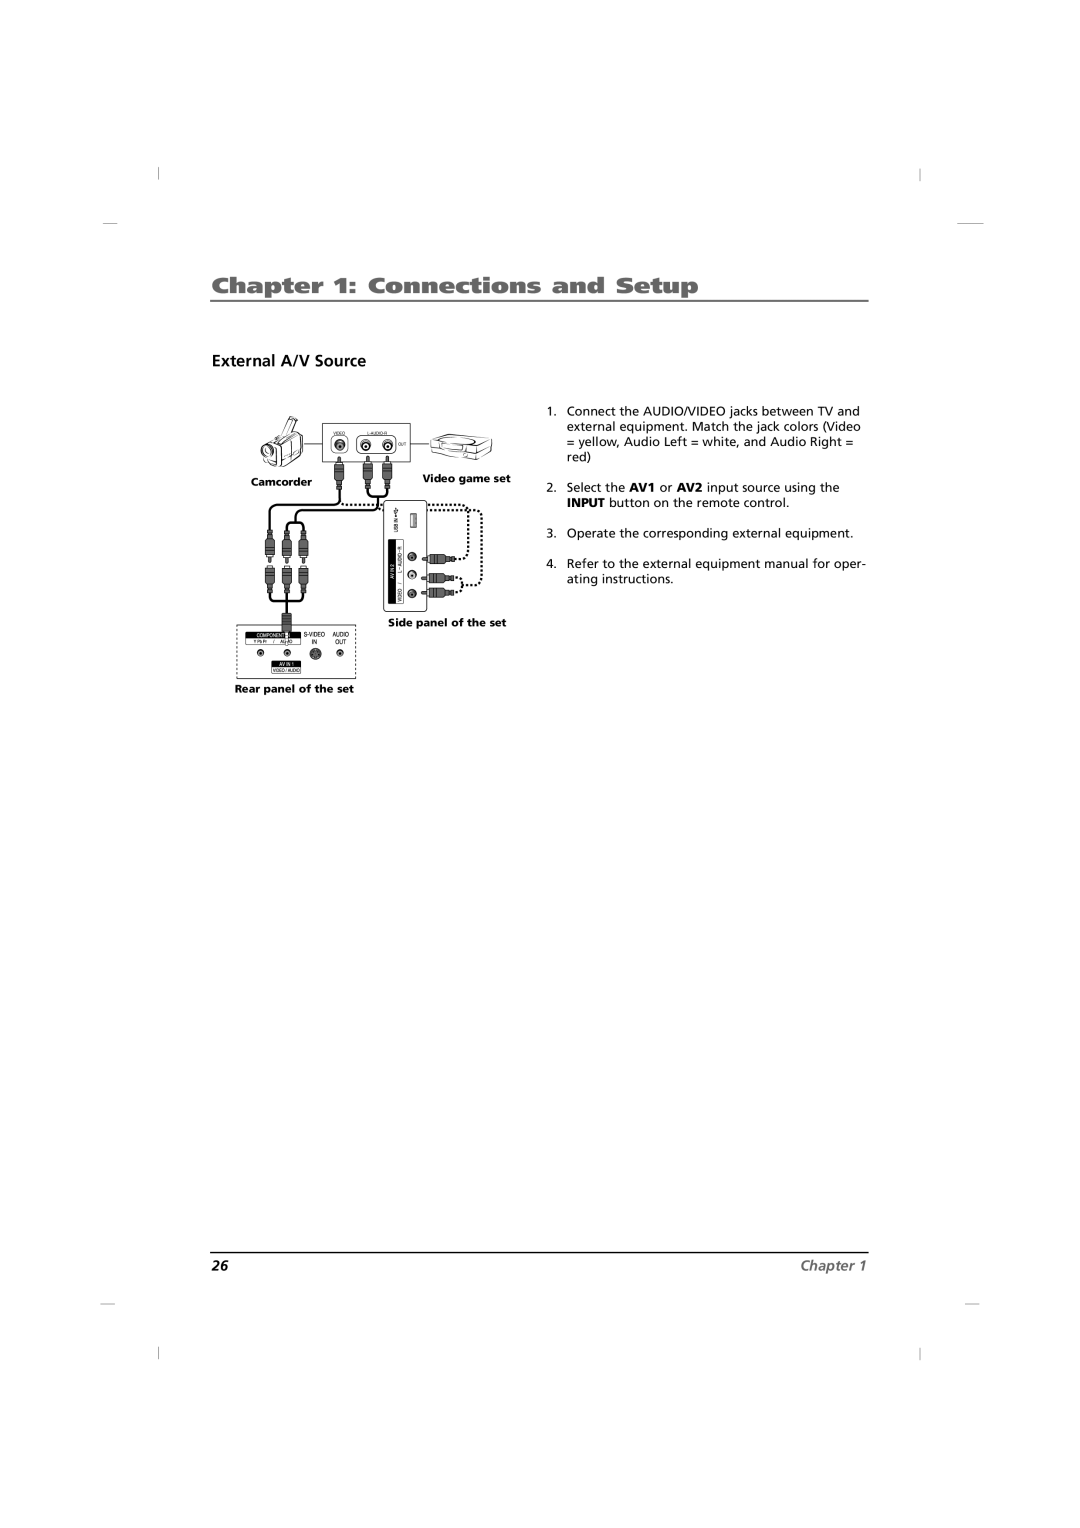 RCA J26CE820, J42CE820, J32CE720 manual External A/V Source, Connections and Setup, Chapter 